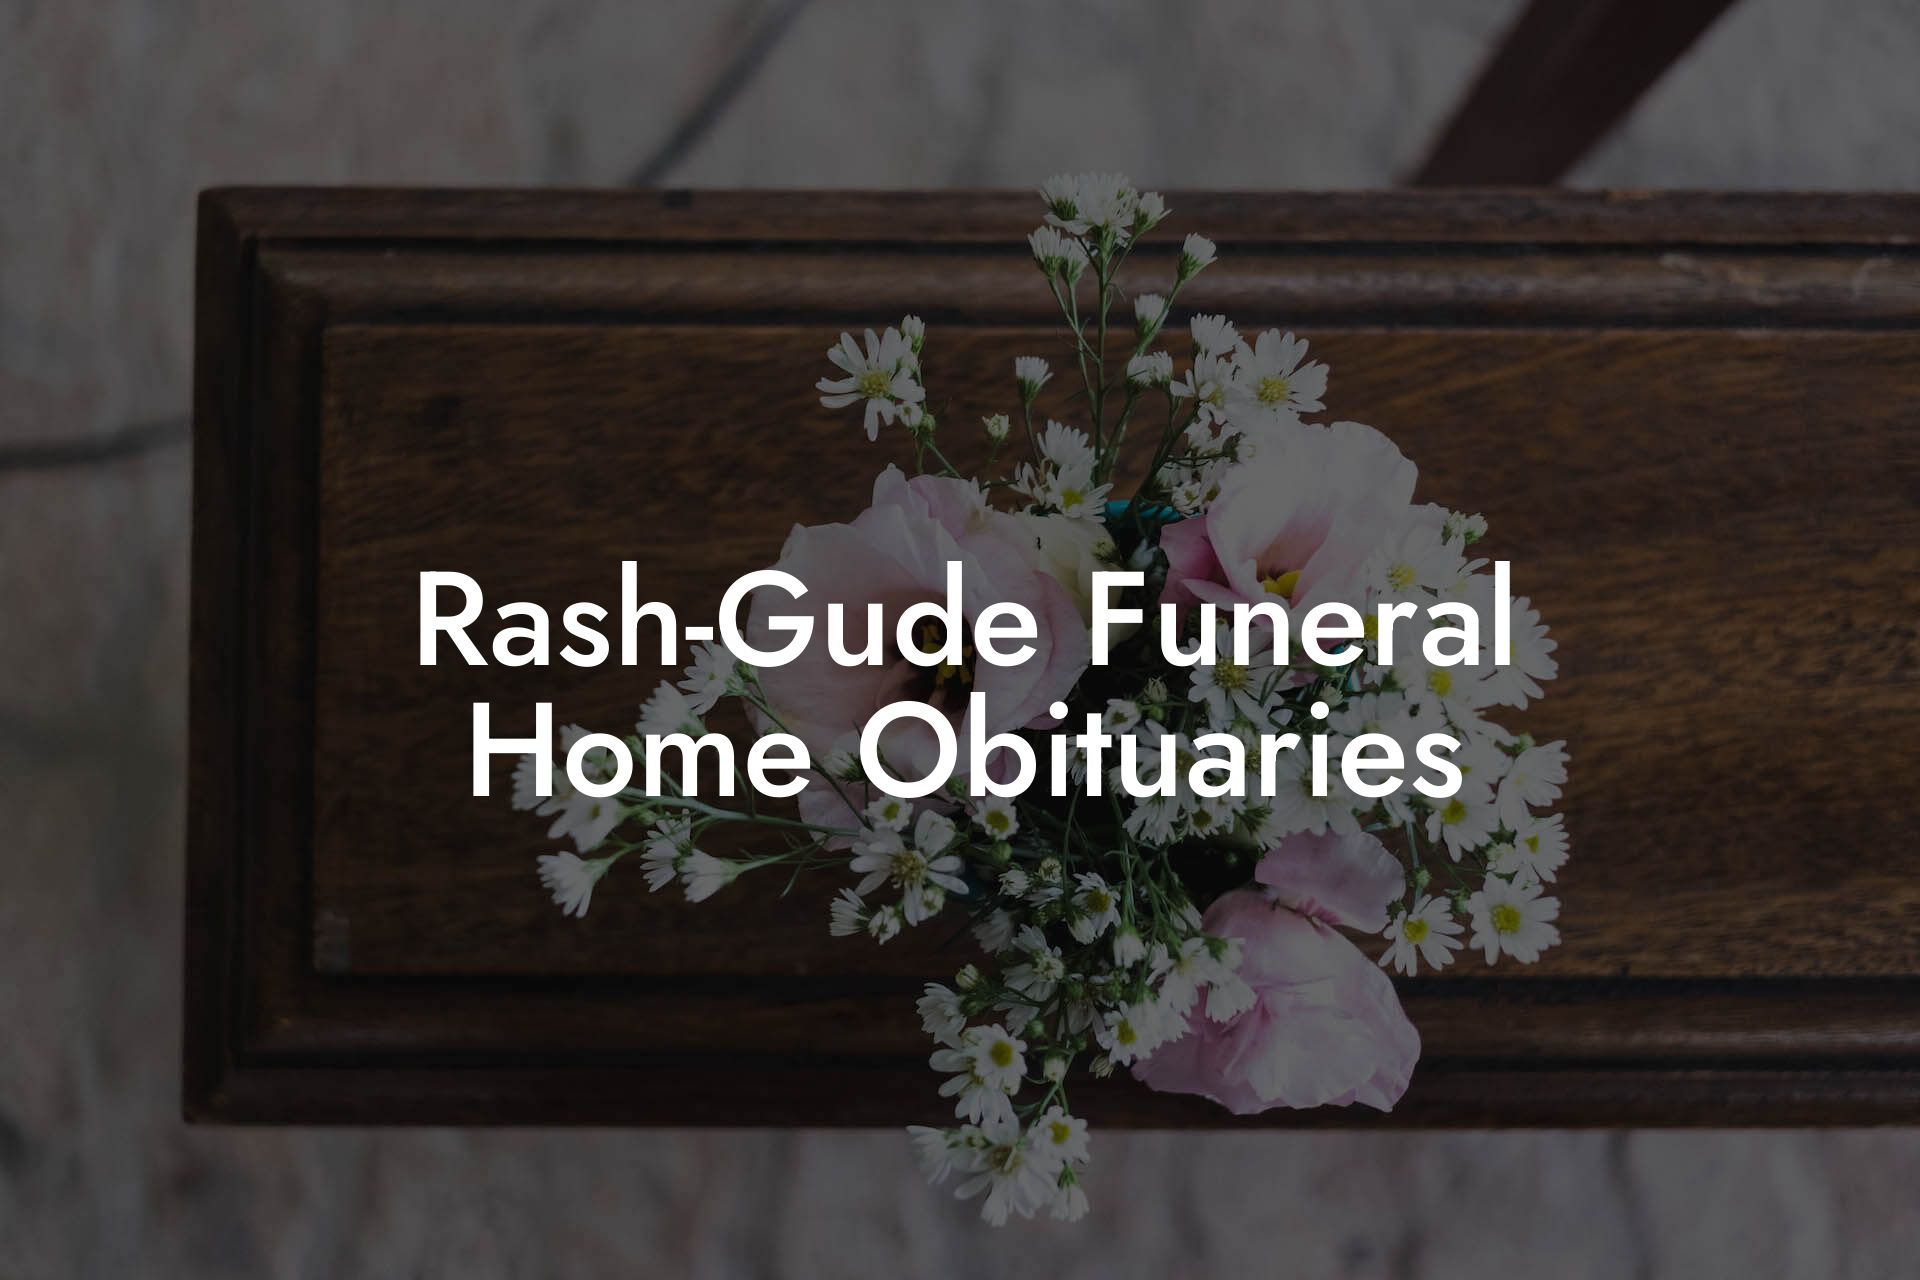 Rash-Gude Funeral Home Obituaries